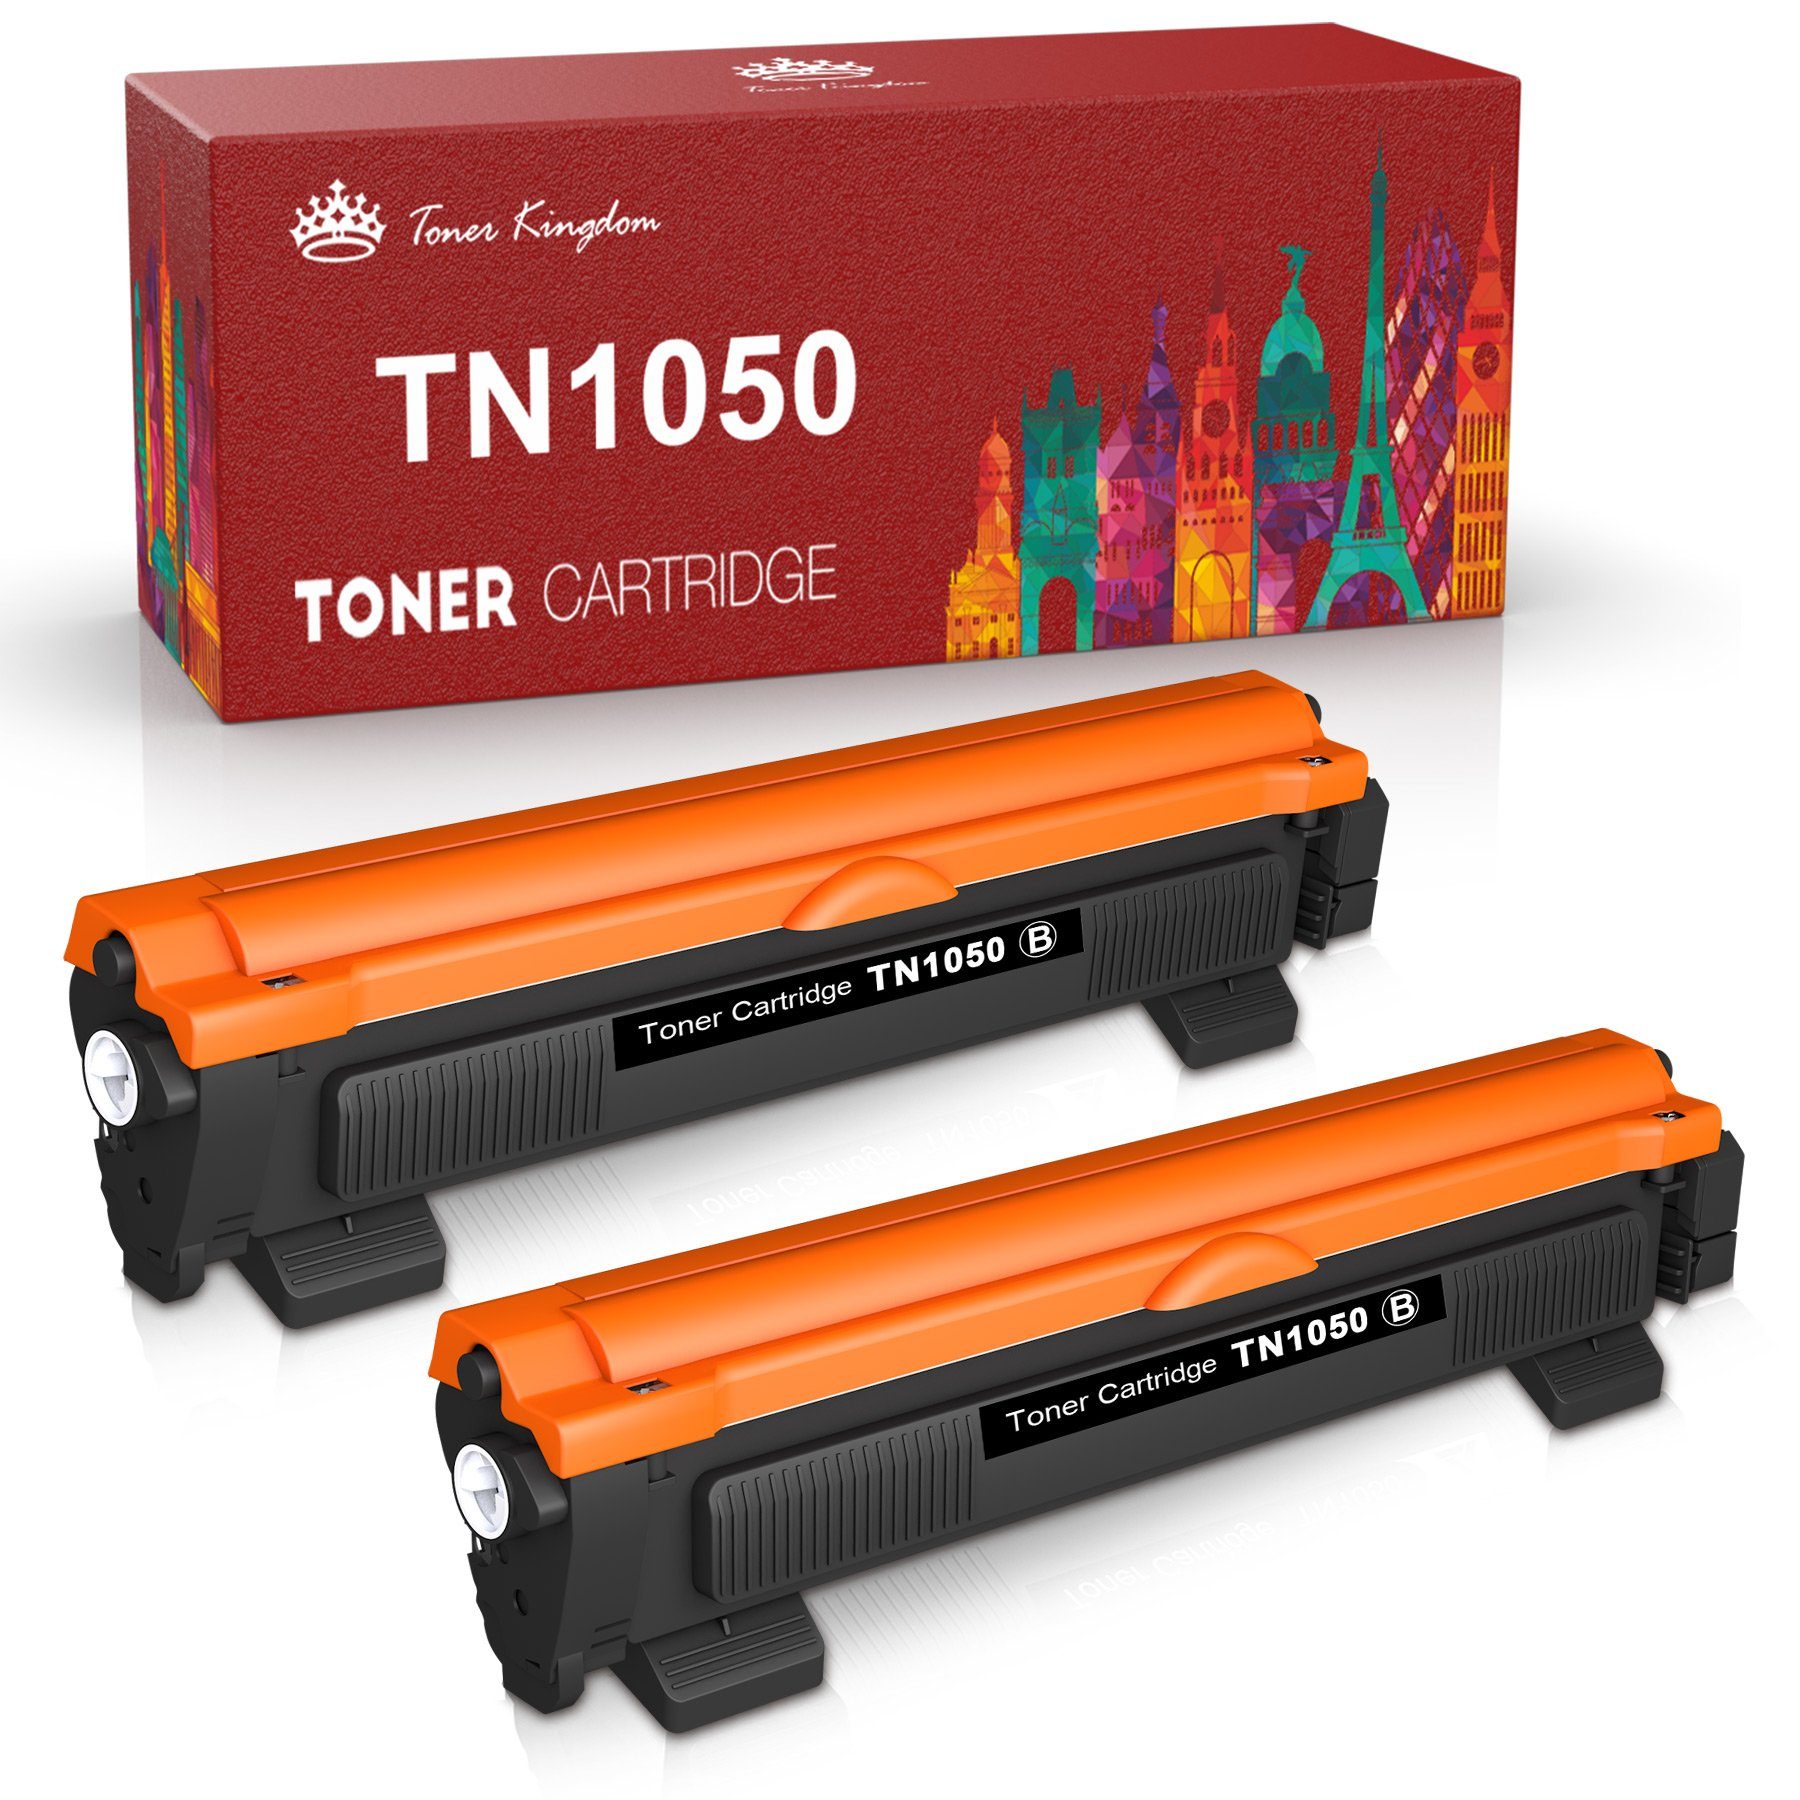 Toner Kingdom Tonerpatrone TN 1050 TN1050 für TN-1050 Brother HL-1110